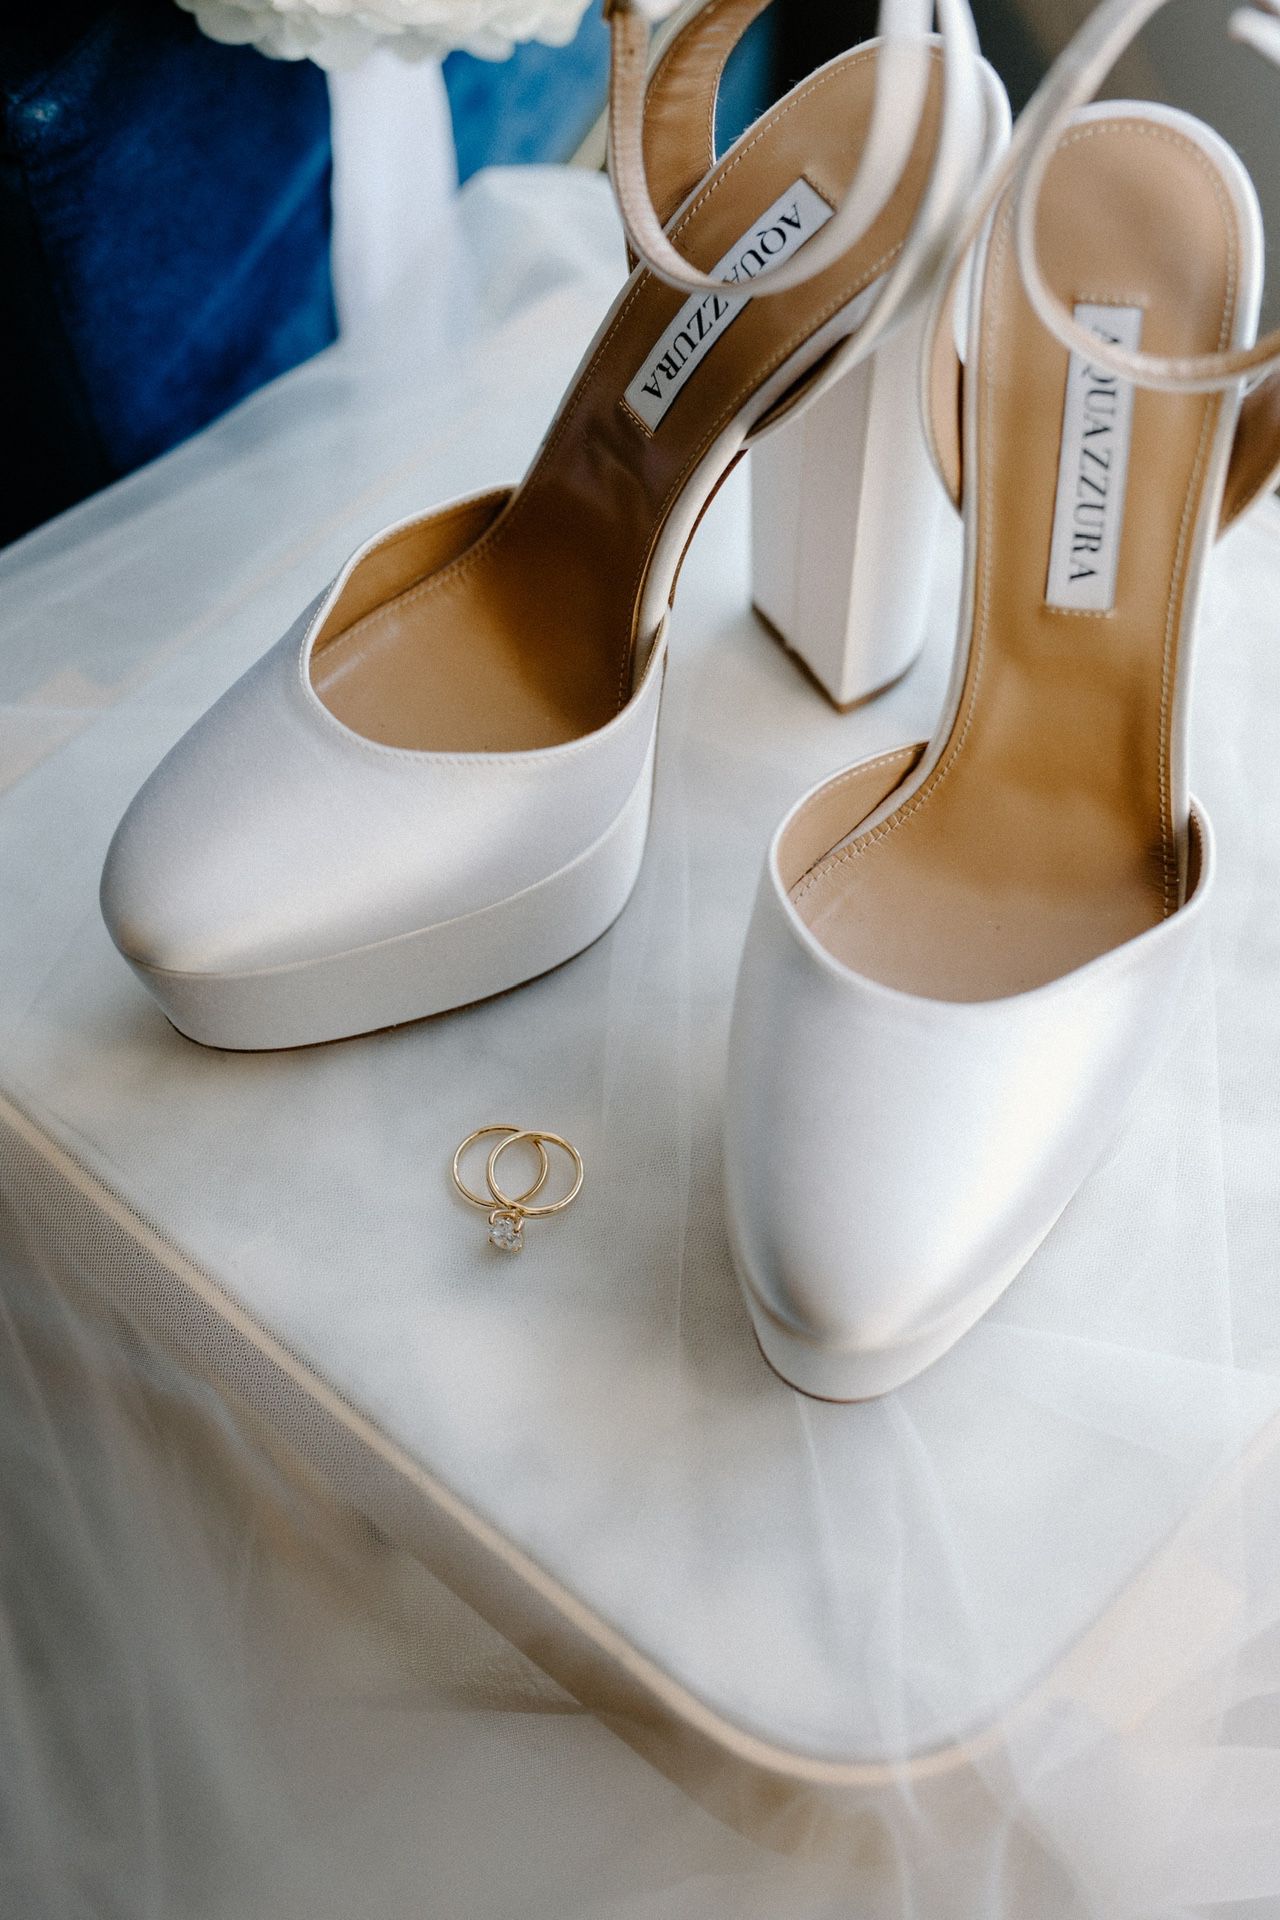 wedding shoes for bride size 6.5 white aquazzura platform heels